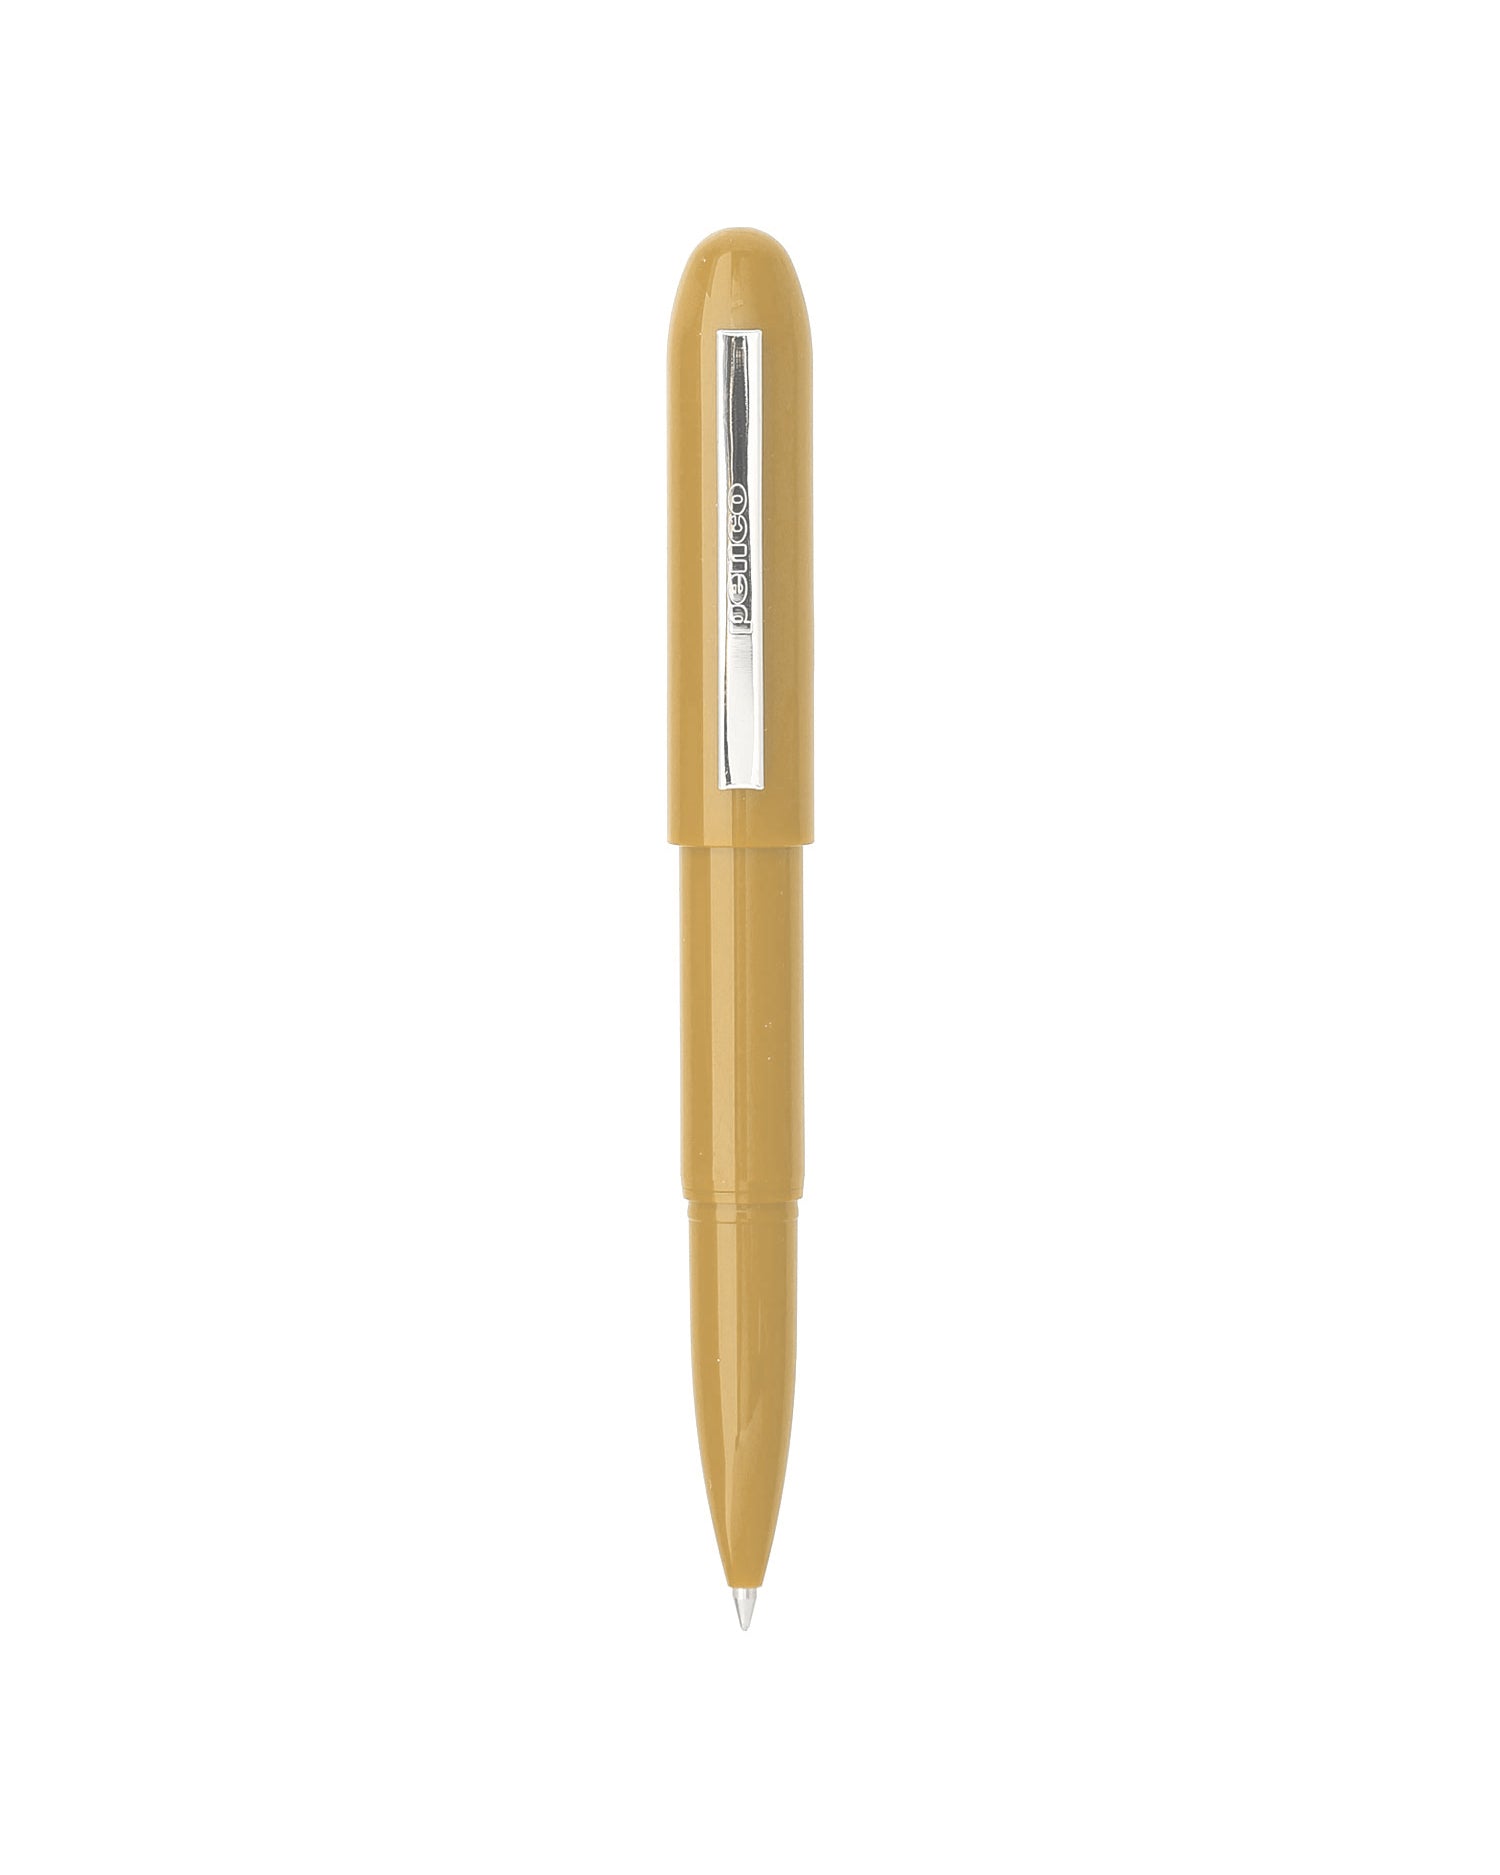 Khaki bullet pen, plastic, Penco brand